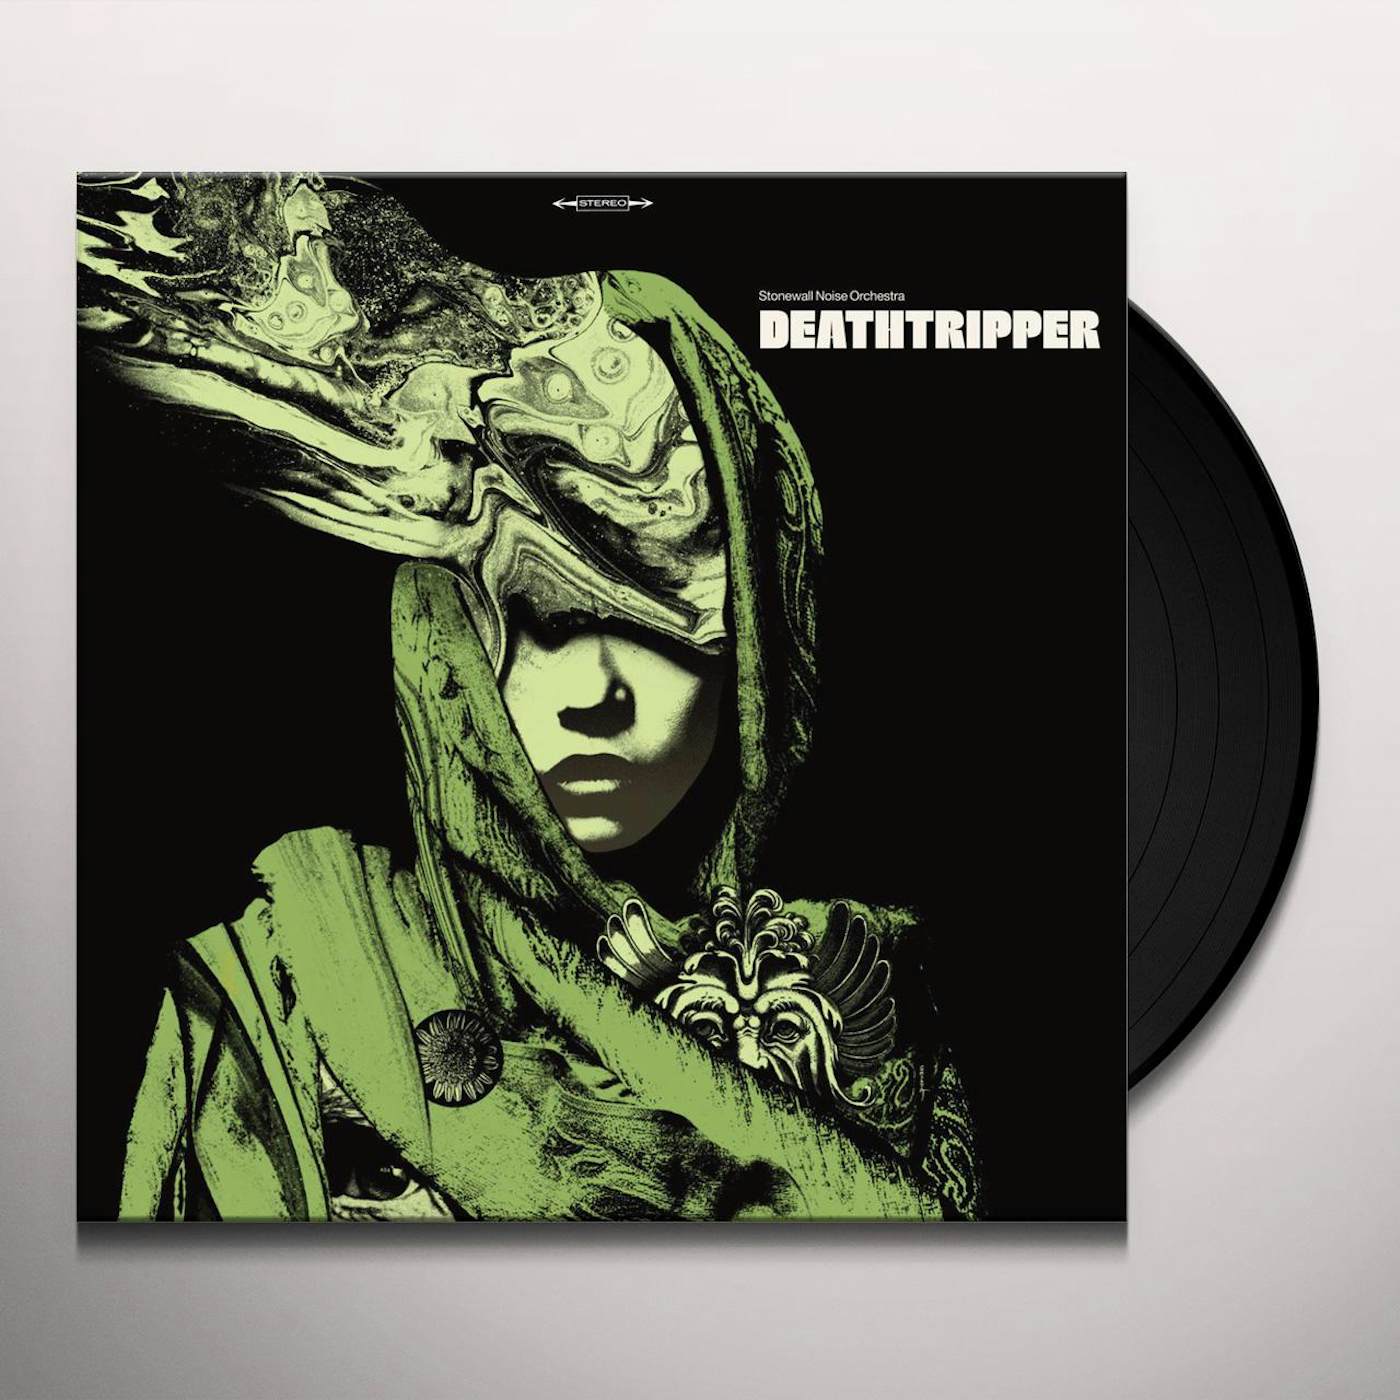 STONEWALL NOISE ORCHESTRA Deathtripper Vinyl Record